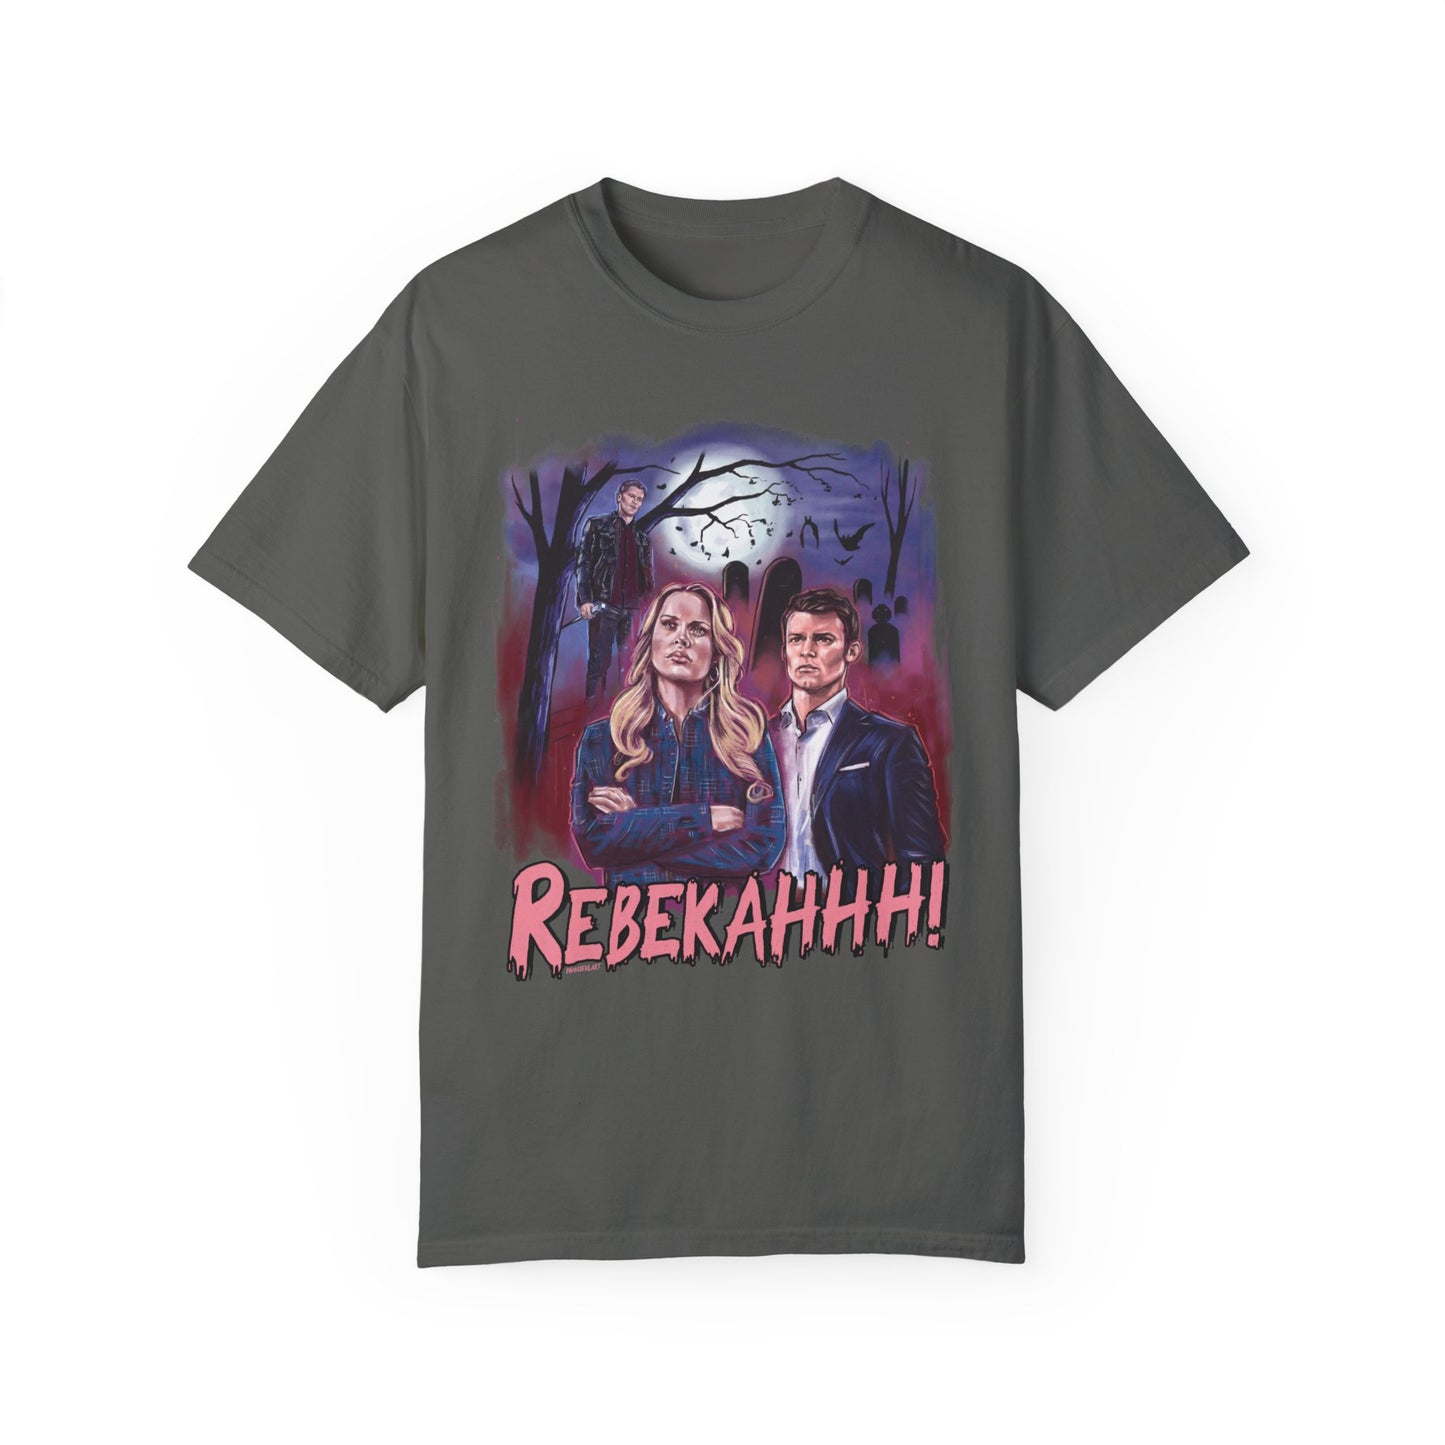 Rebekahhhh Tshirt